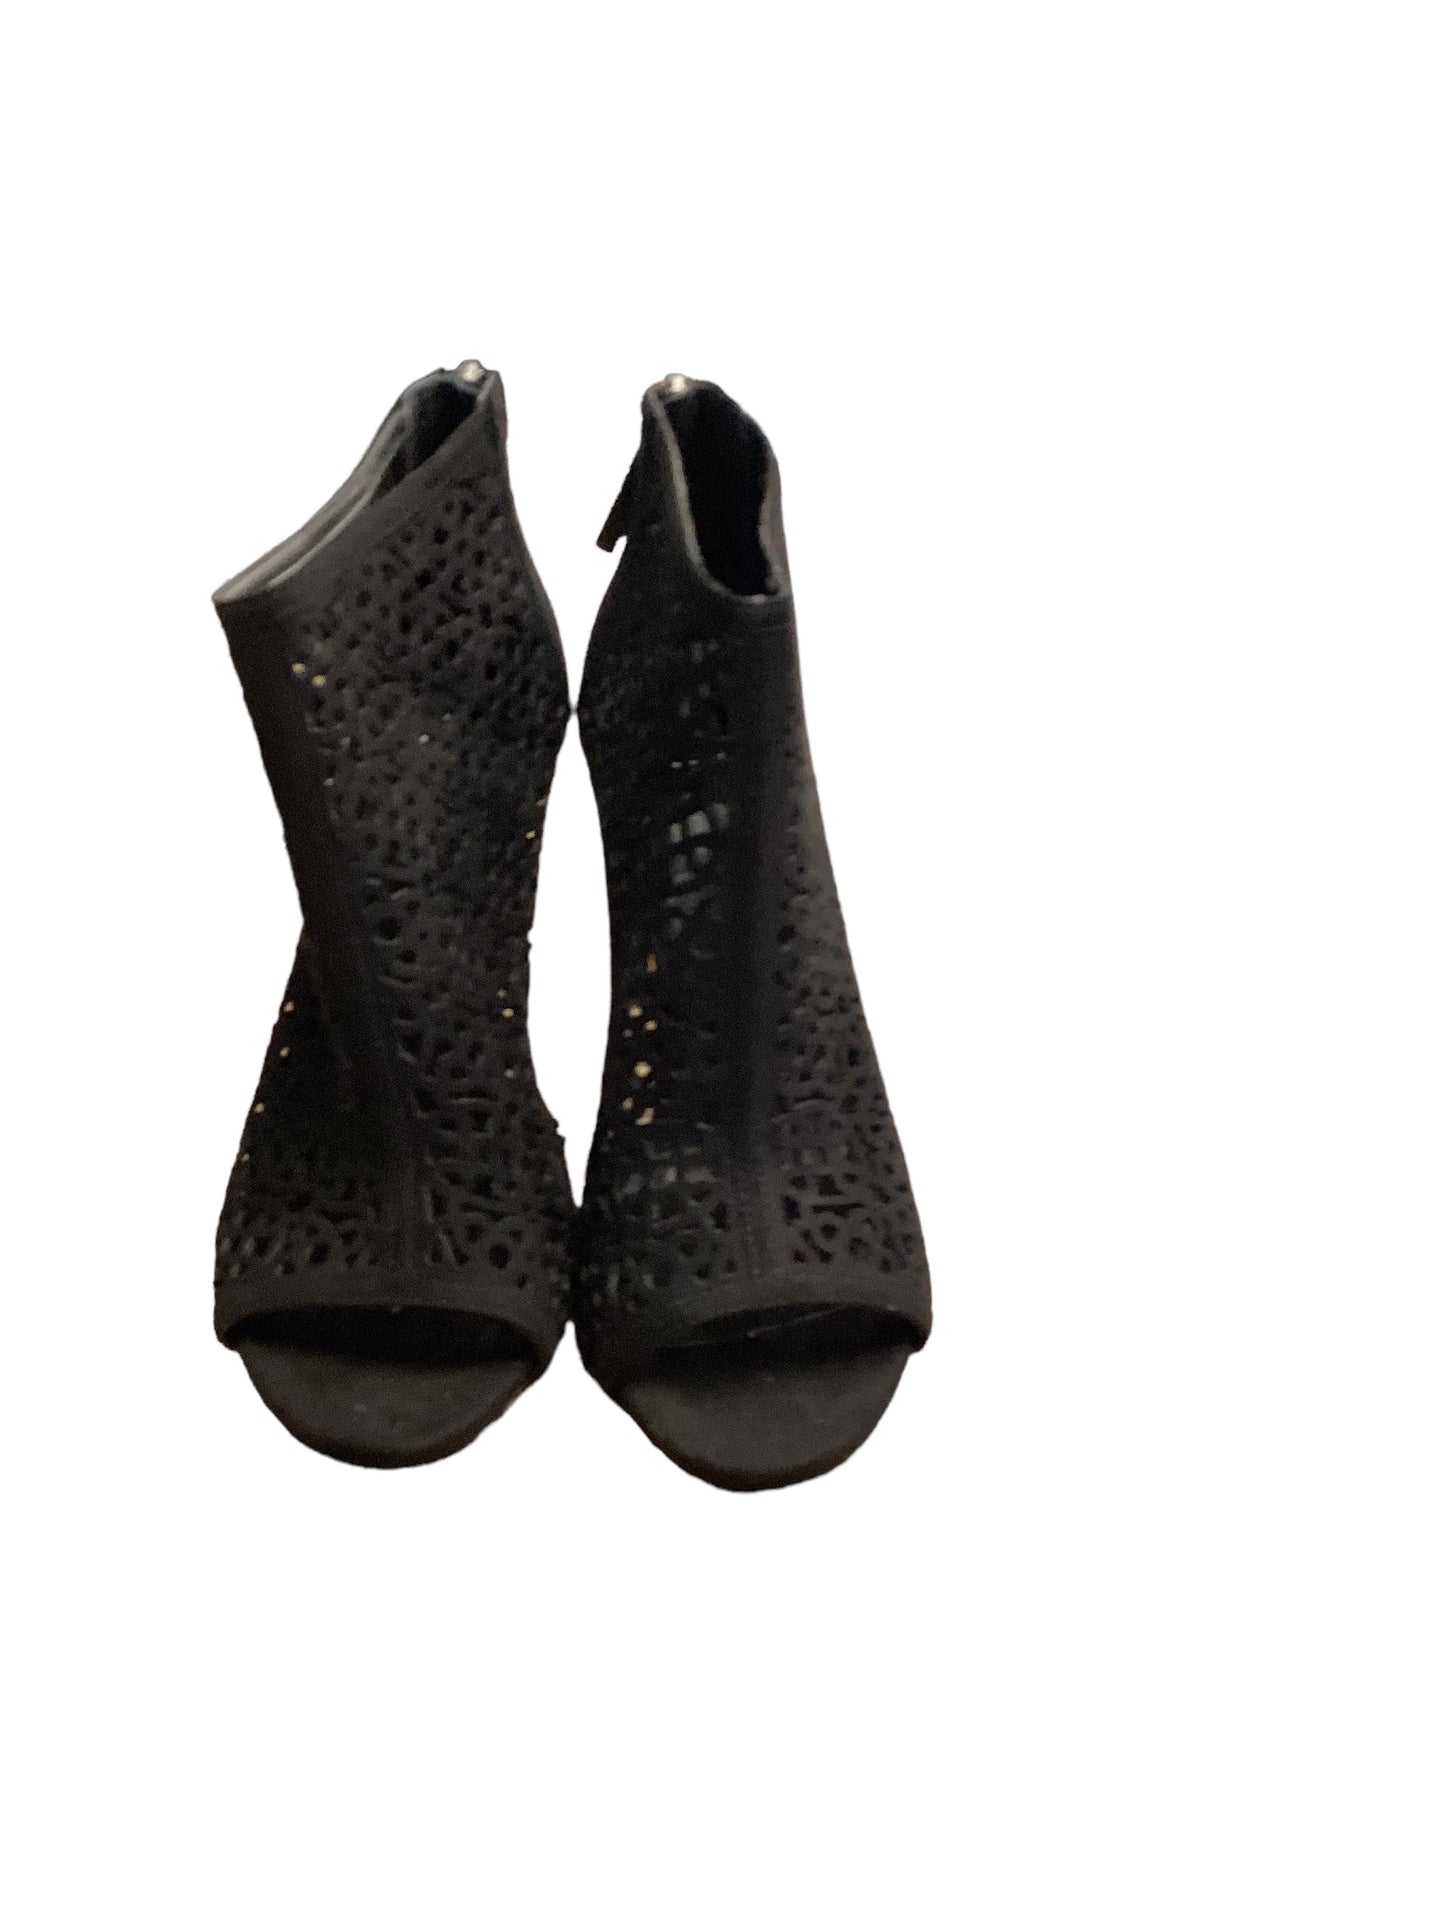 Black Sandals Heels Stiletto White House Black Market, Size 8